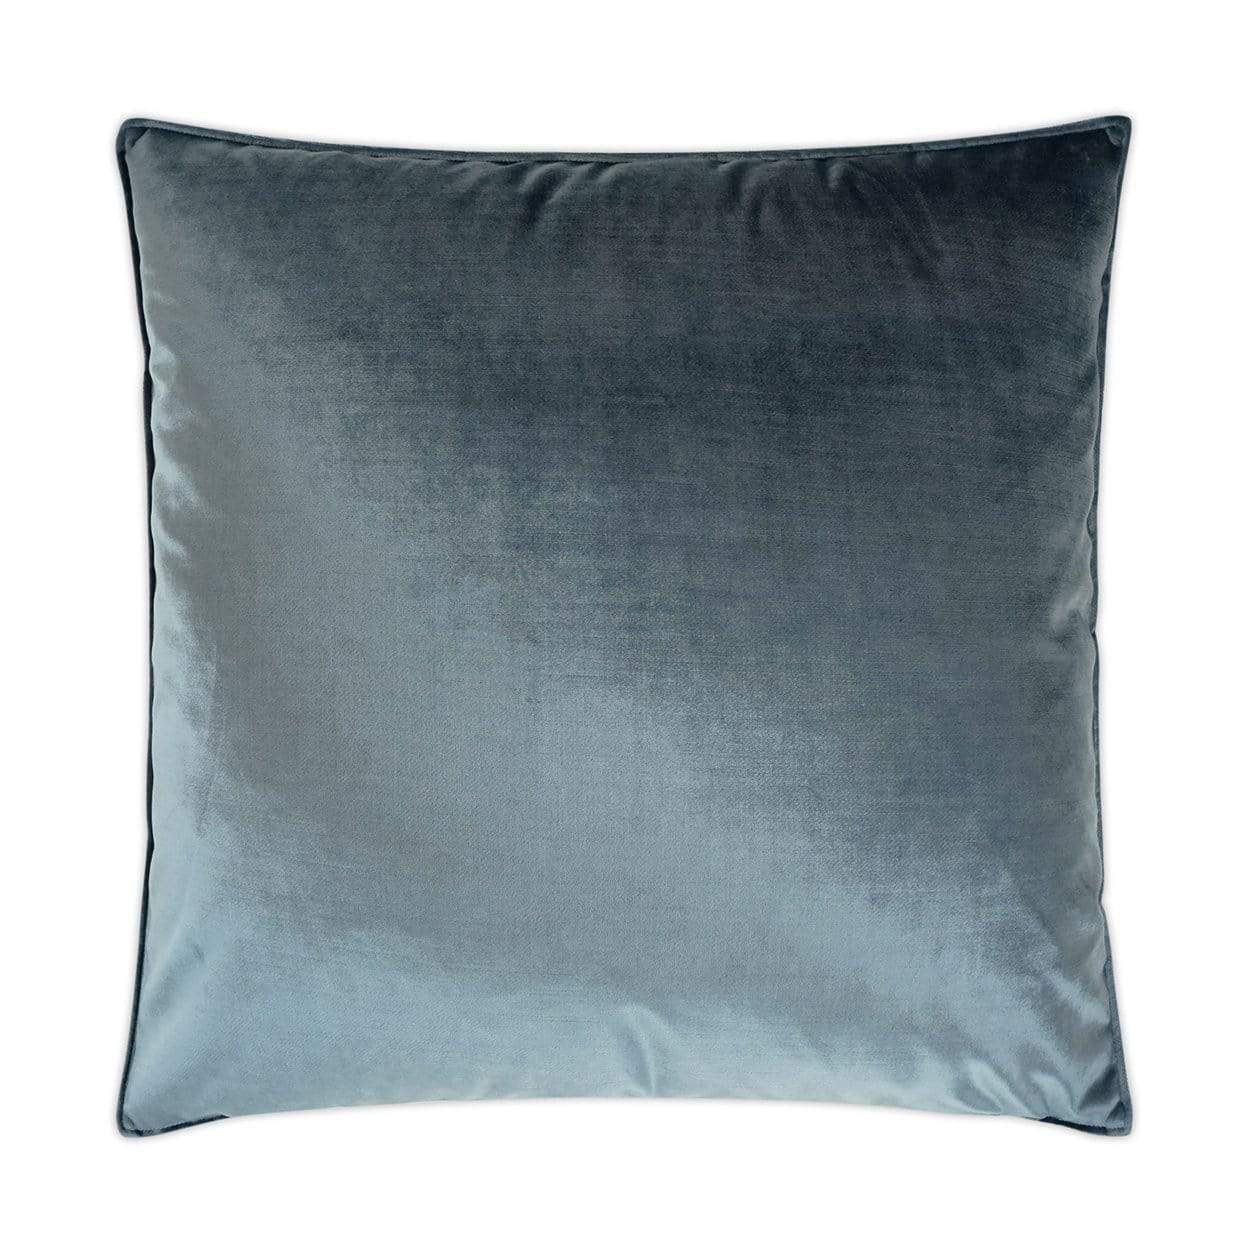 D.V. Kap D.V. Kap Iridescence Pillow - Available in 8 Colors Baltic 3383-B